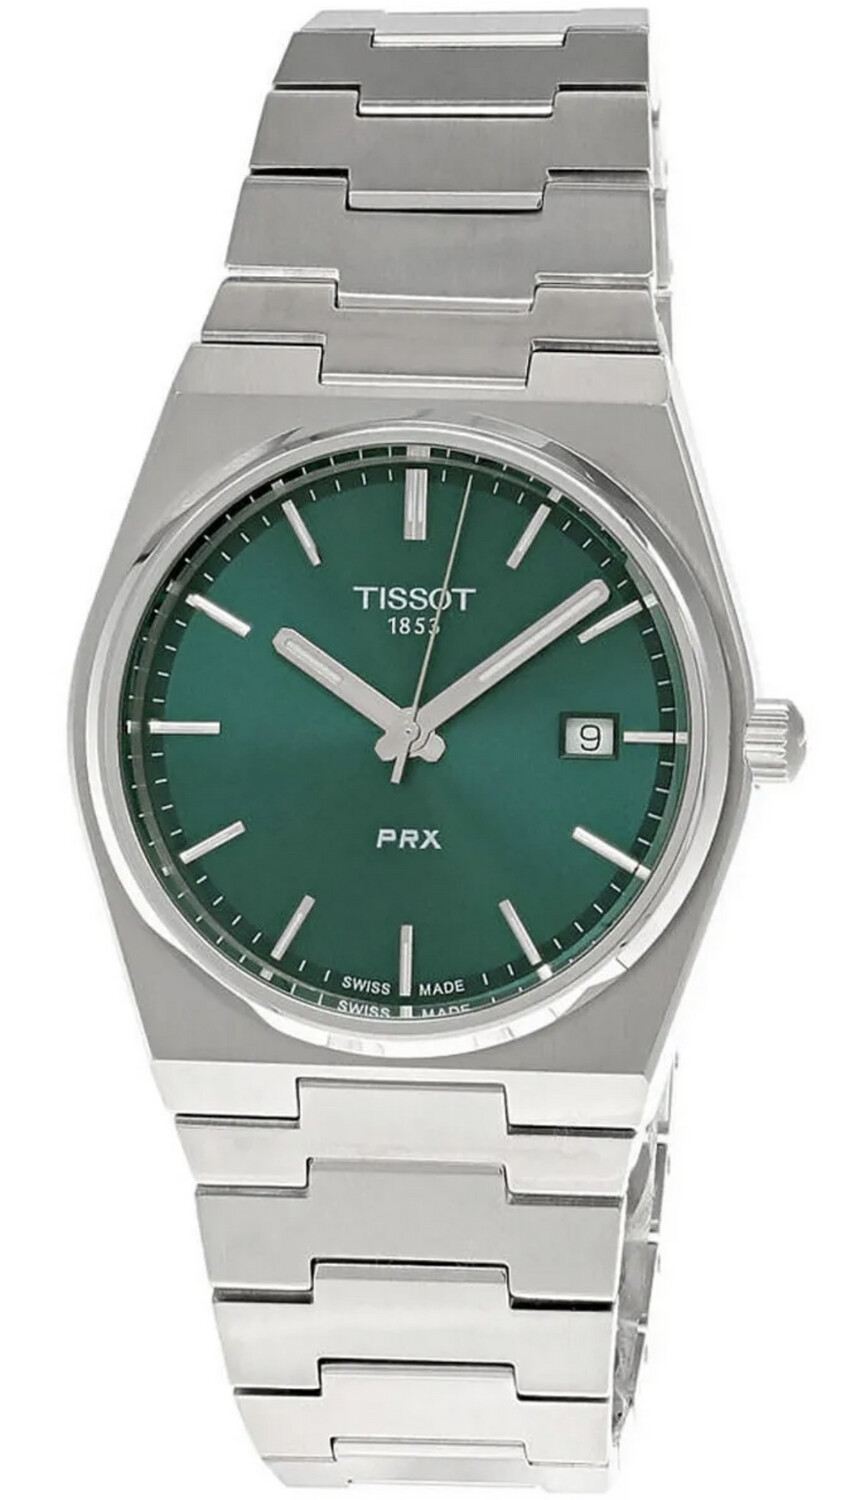 Tissot PRX GREEN